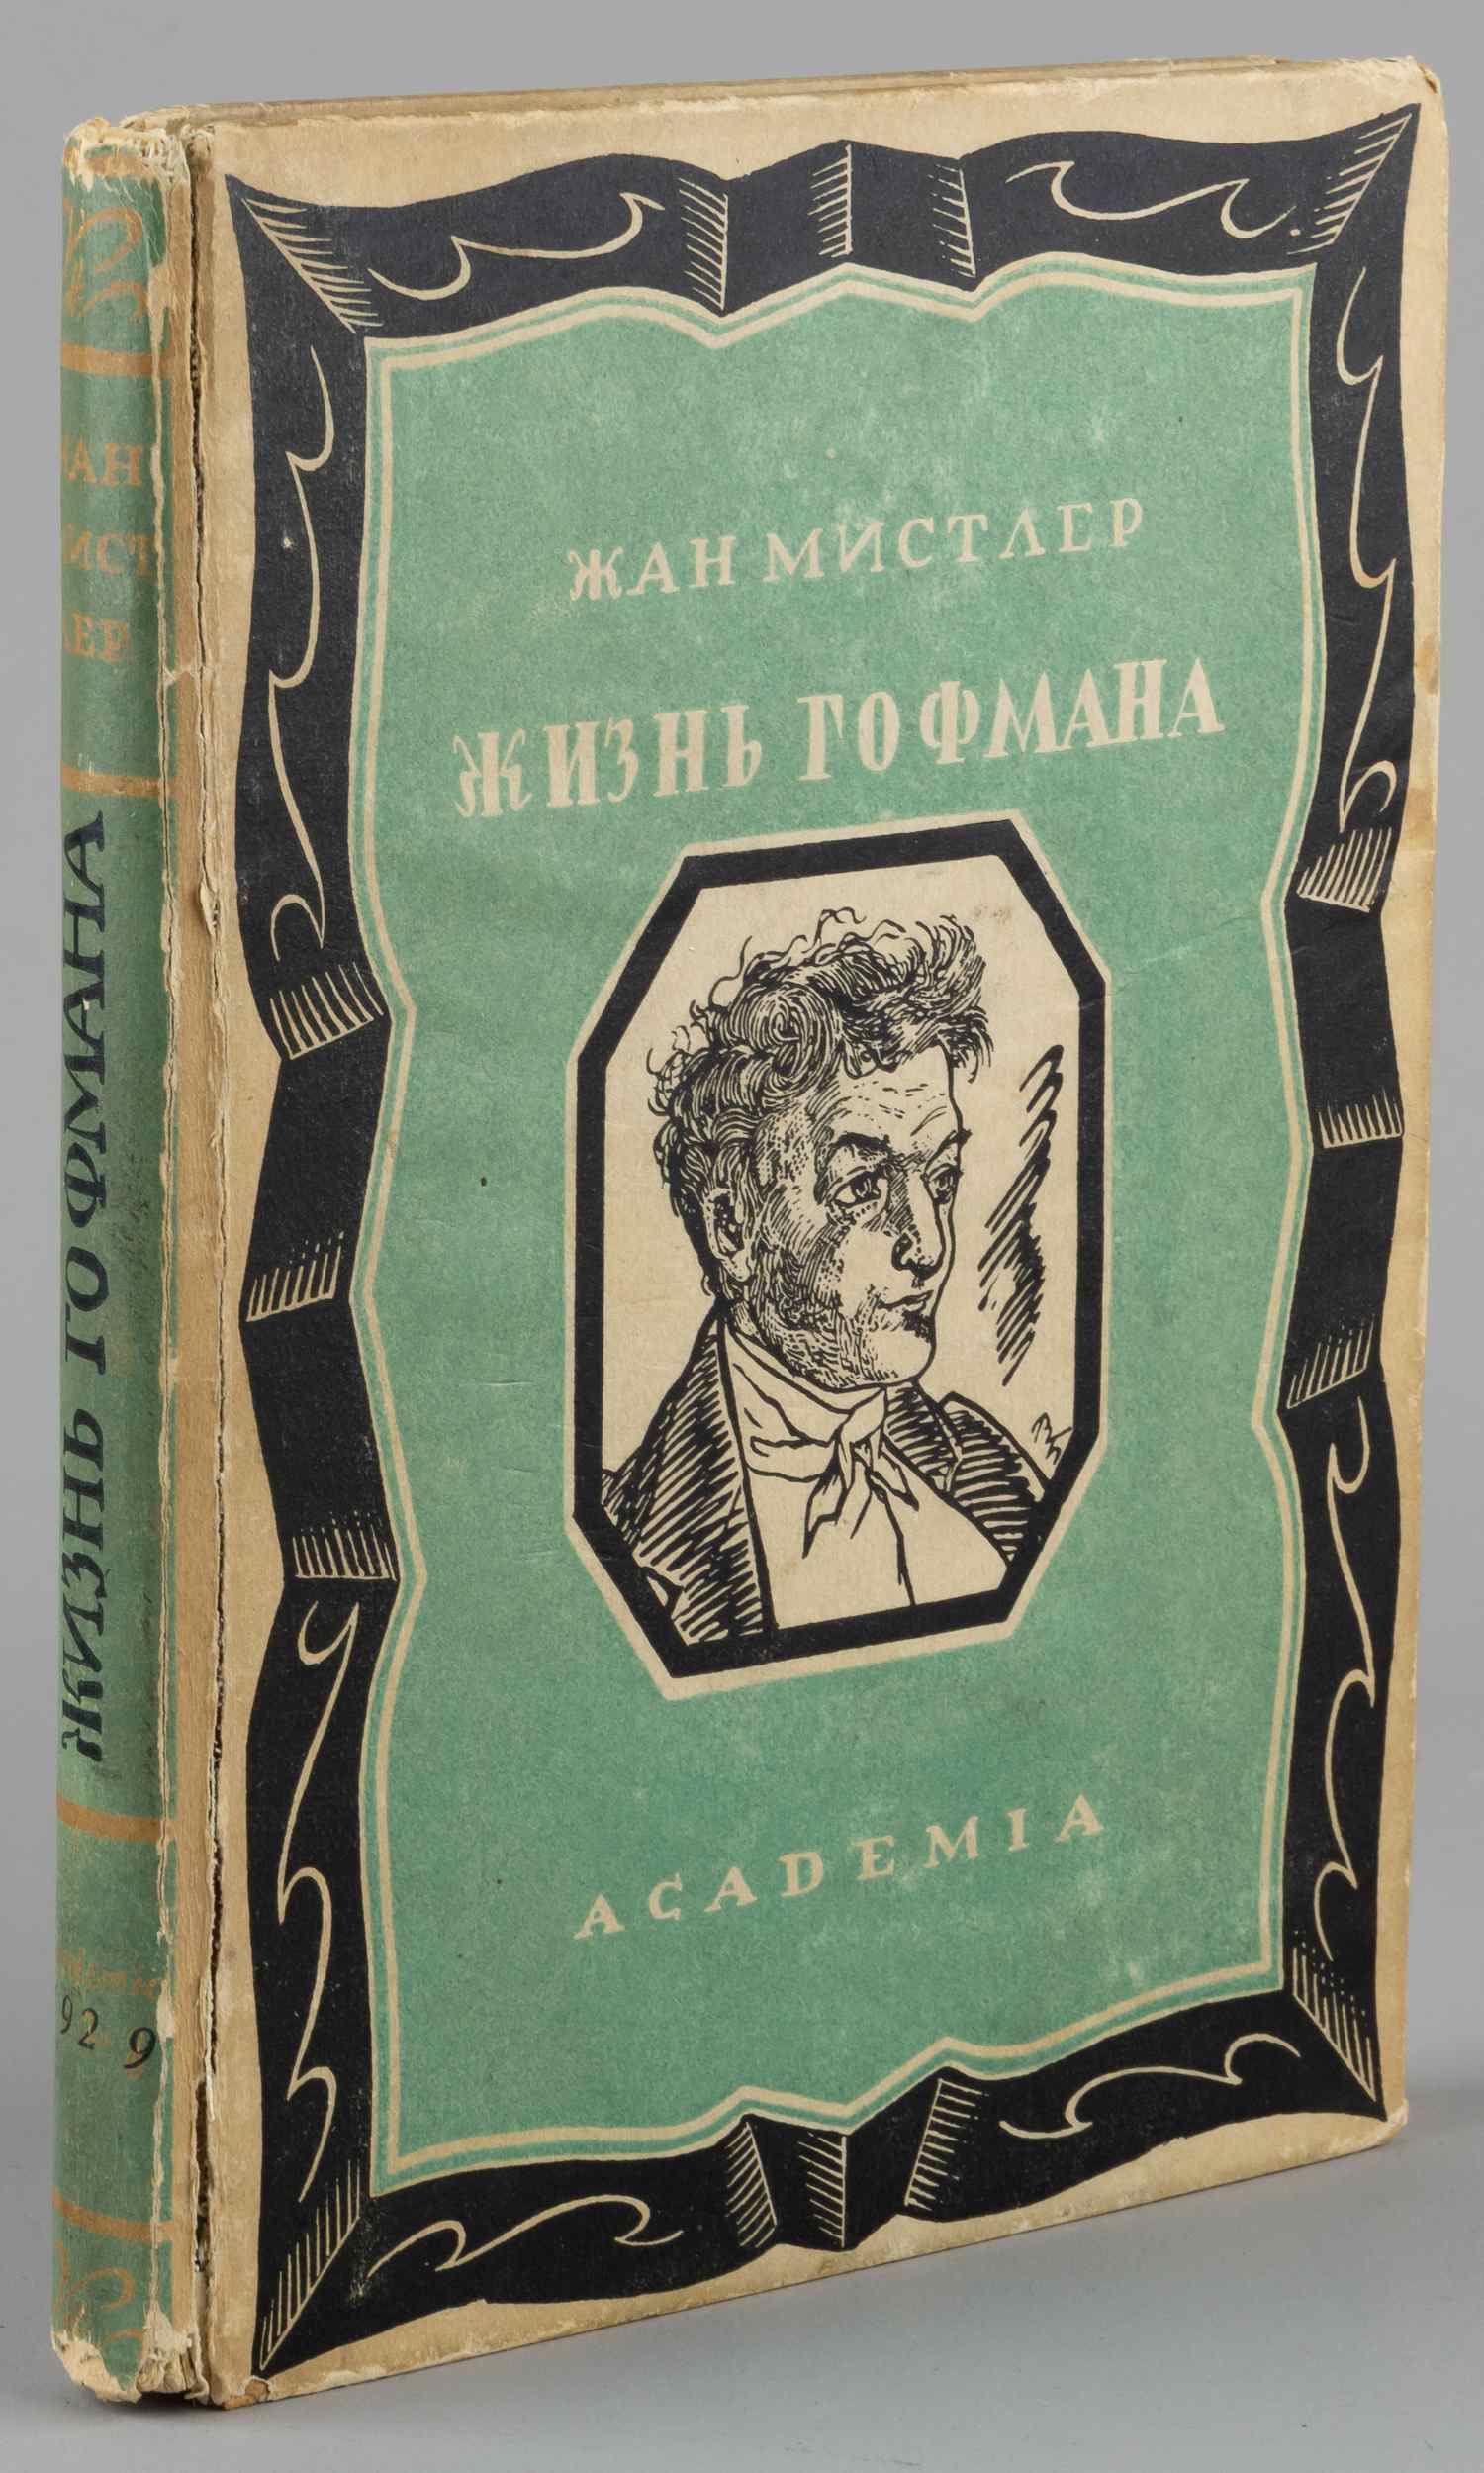 Мистер Ж. Жизнь Гофмана (Л., 1929).